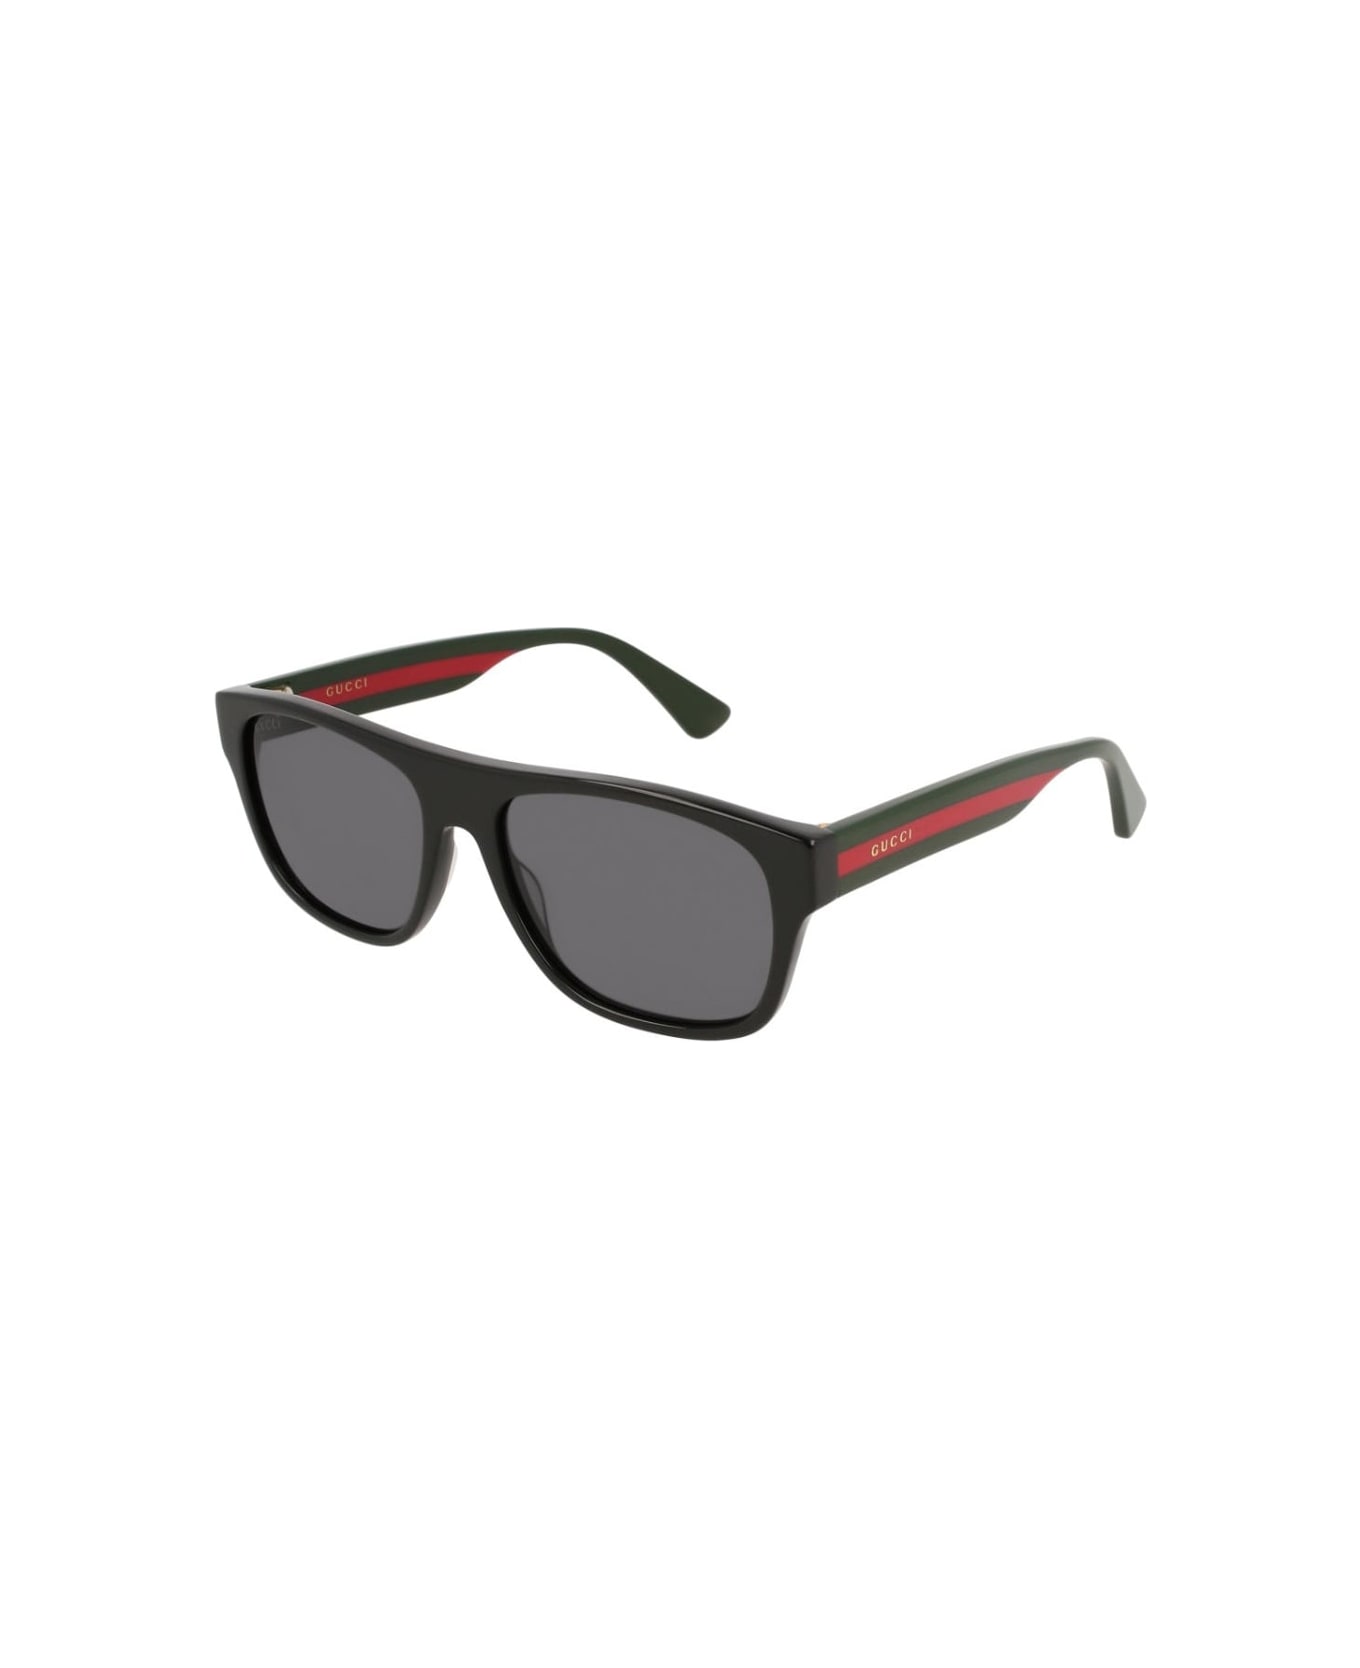 Gucci Eyewear GG0341 002 Sunglasses